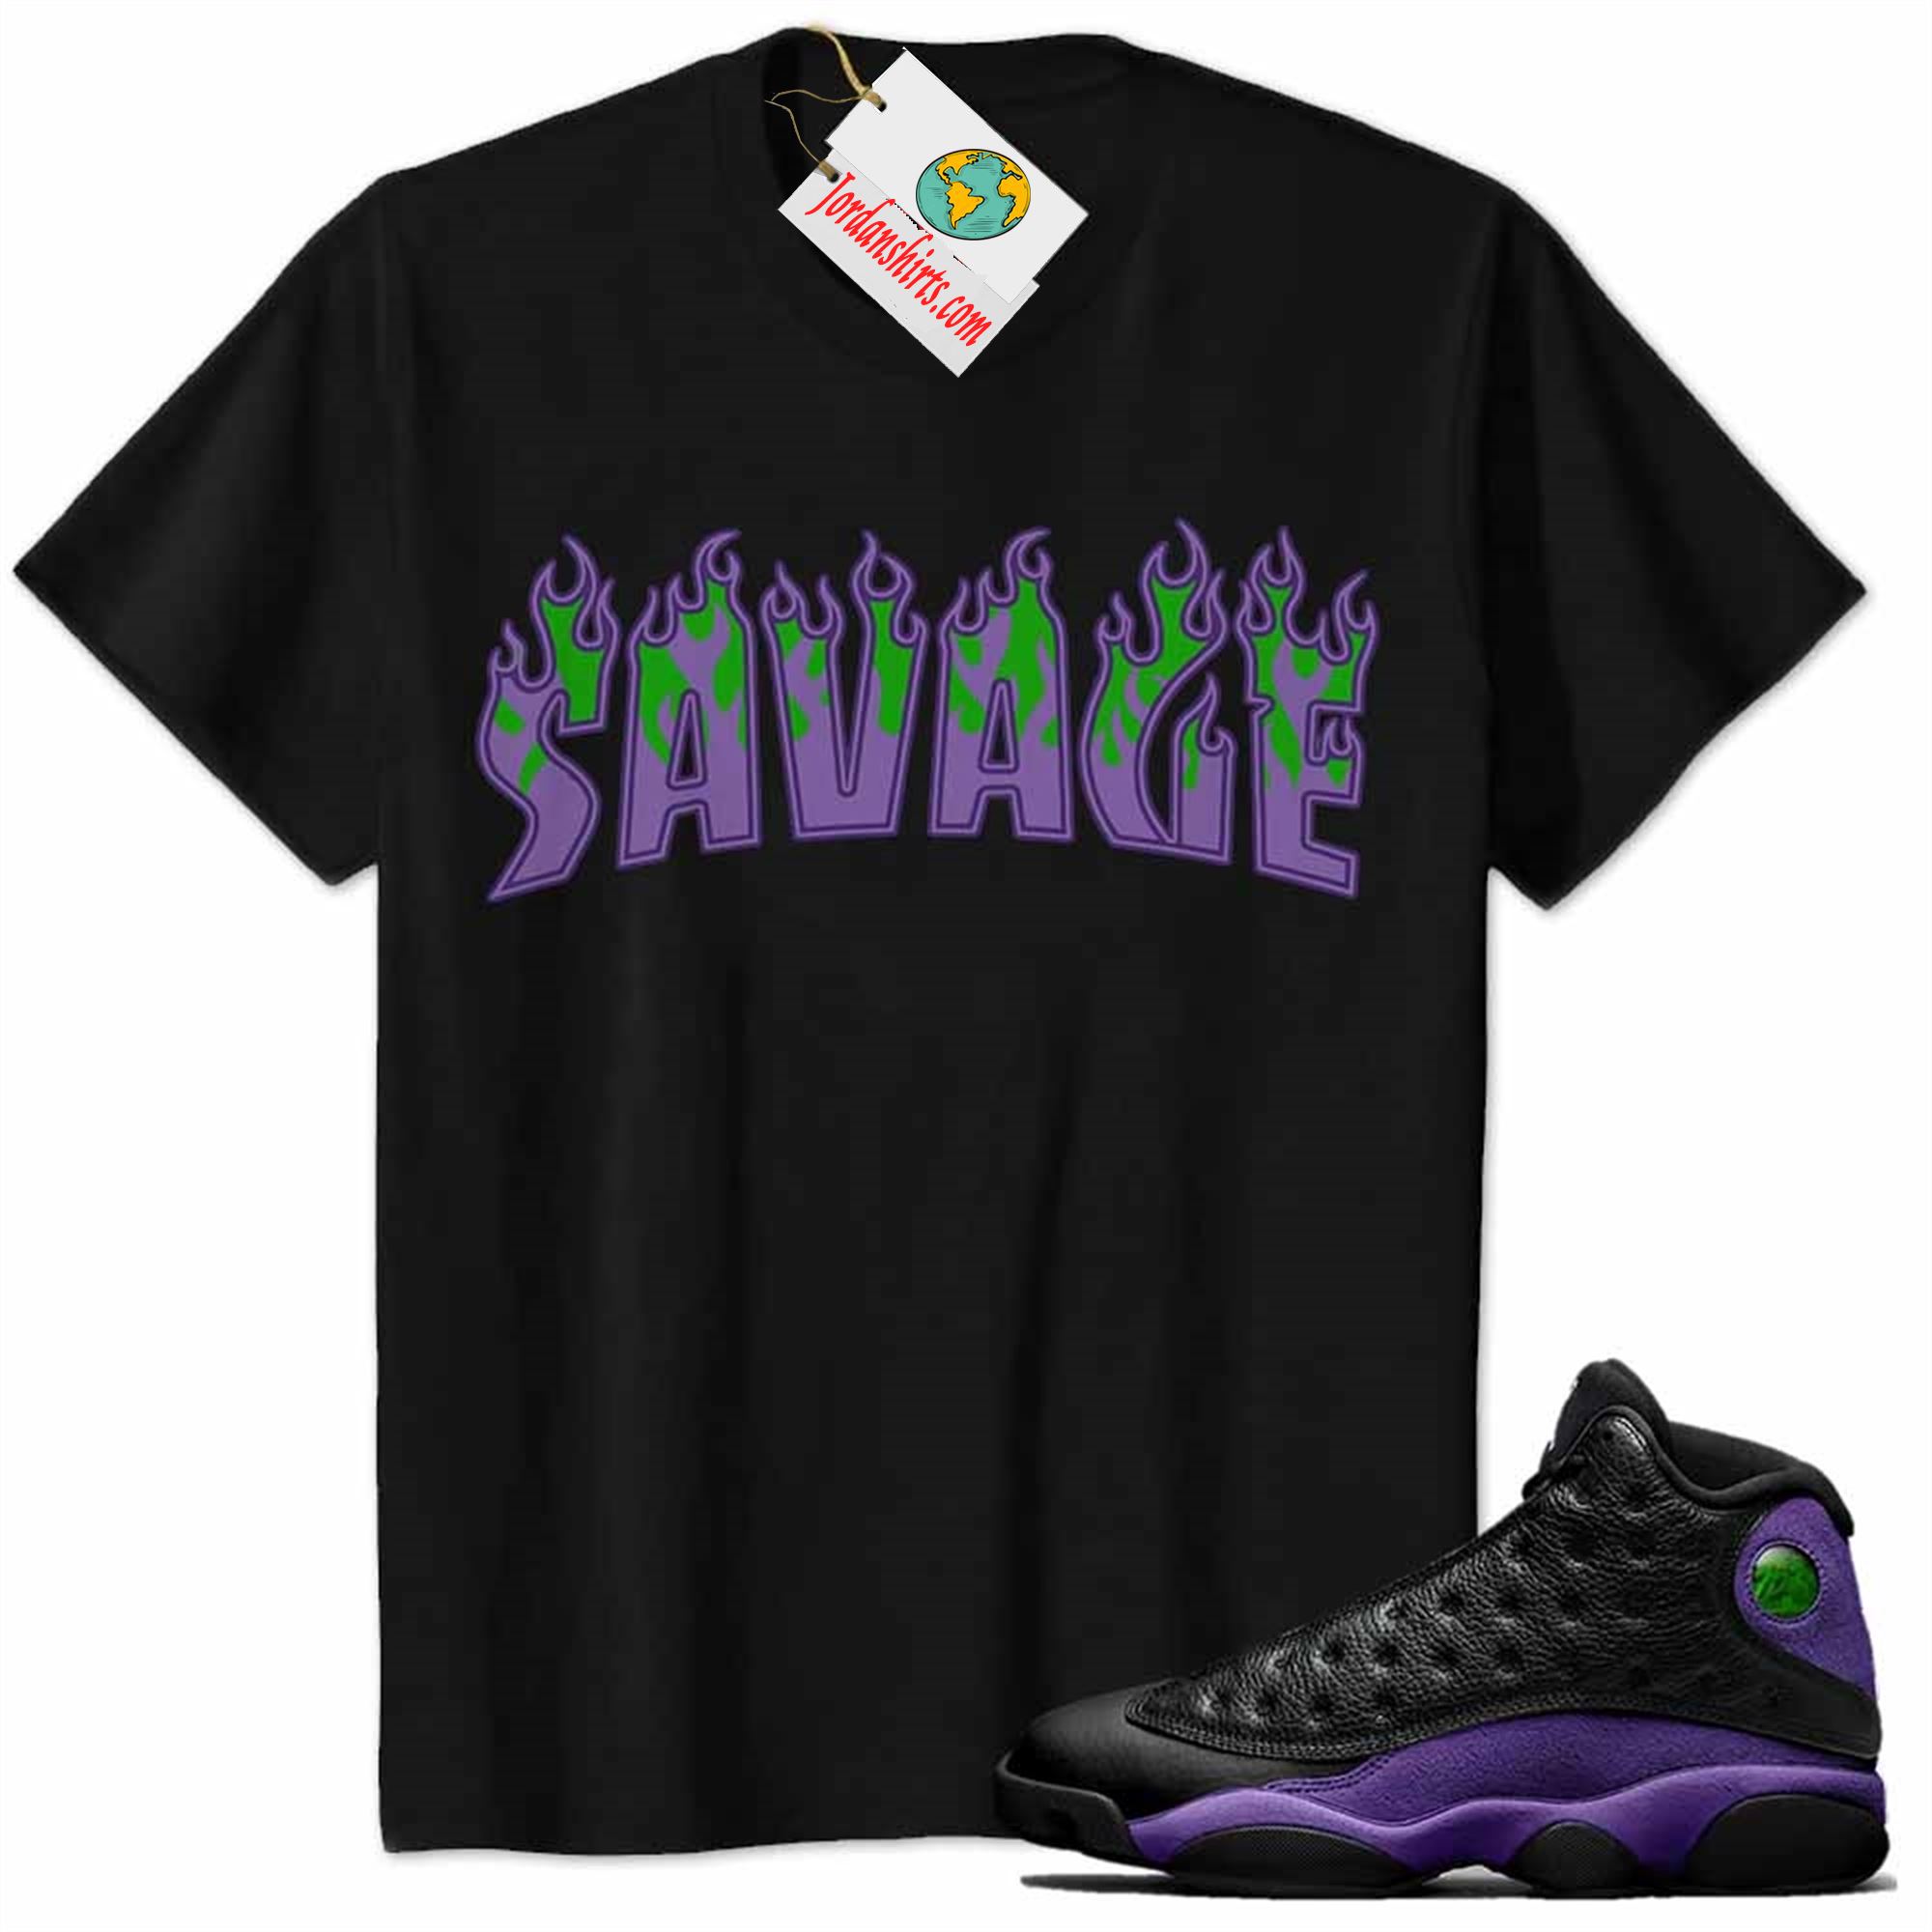 Jordan 13 Shirt, Savage Fire Style Black Air Jordan 13 Court Purple 13s Size Up To 5xl